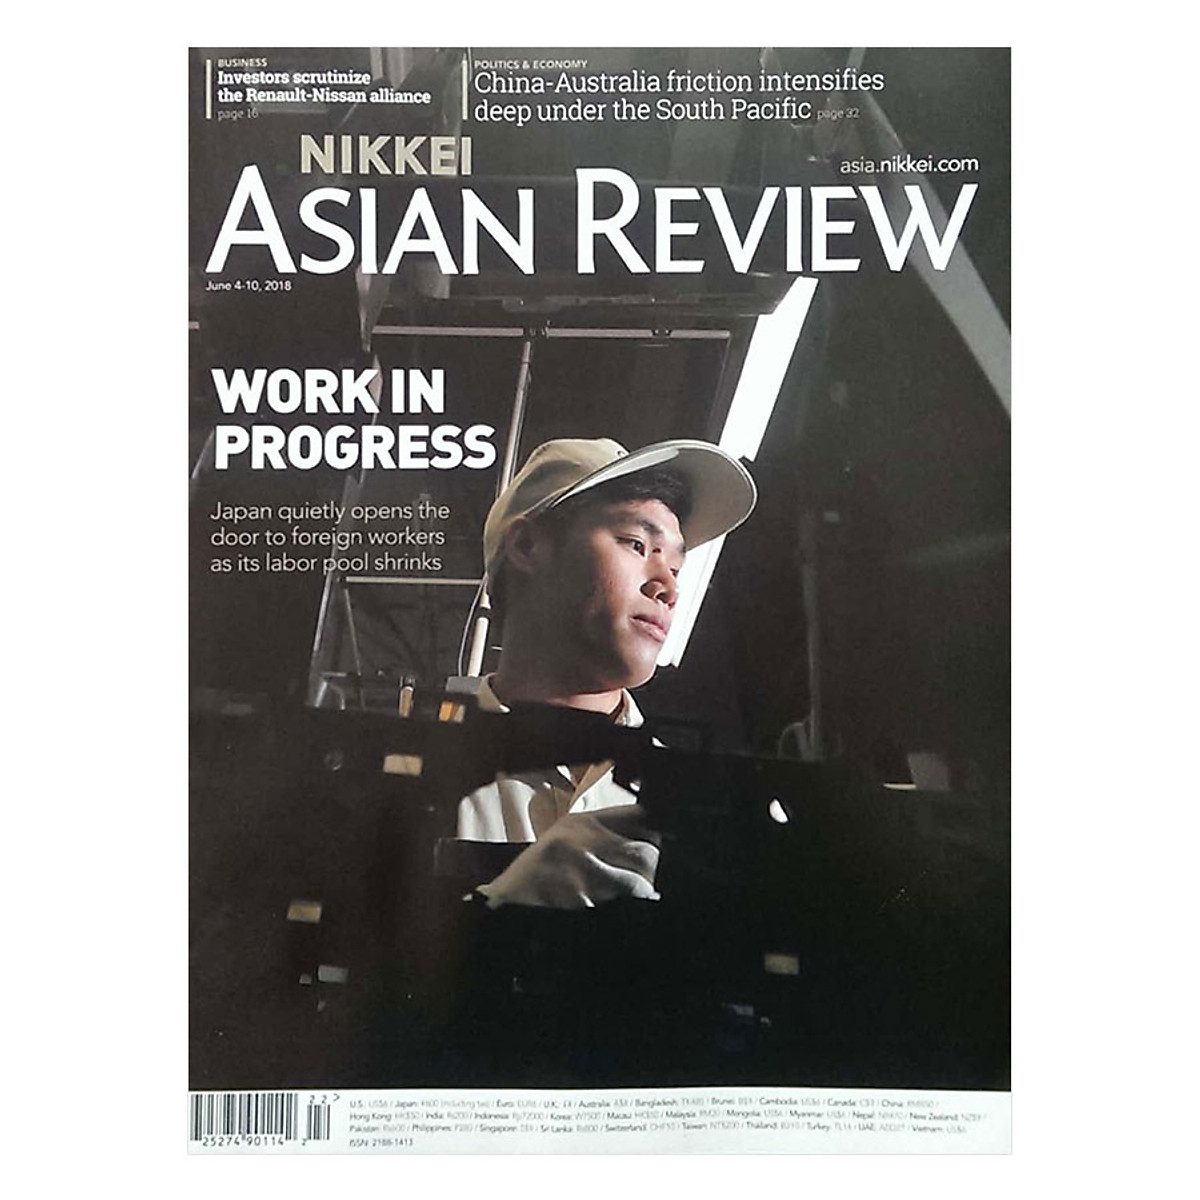 Nikkei Asian Review: WORK IN PROGRESS - 22